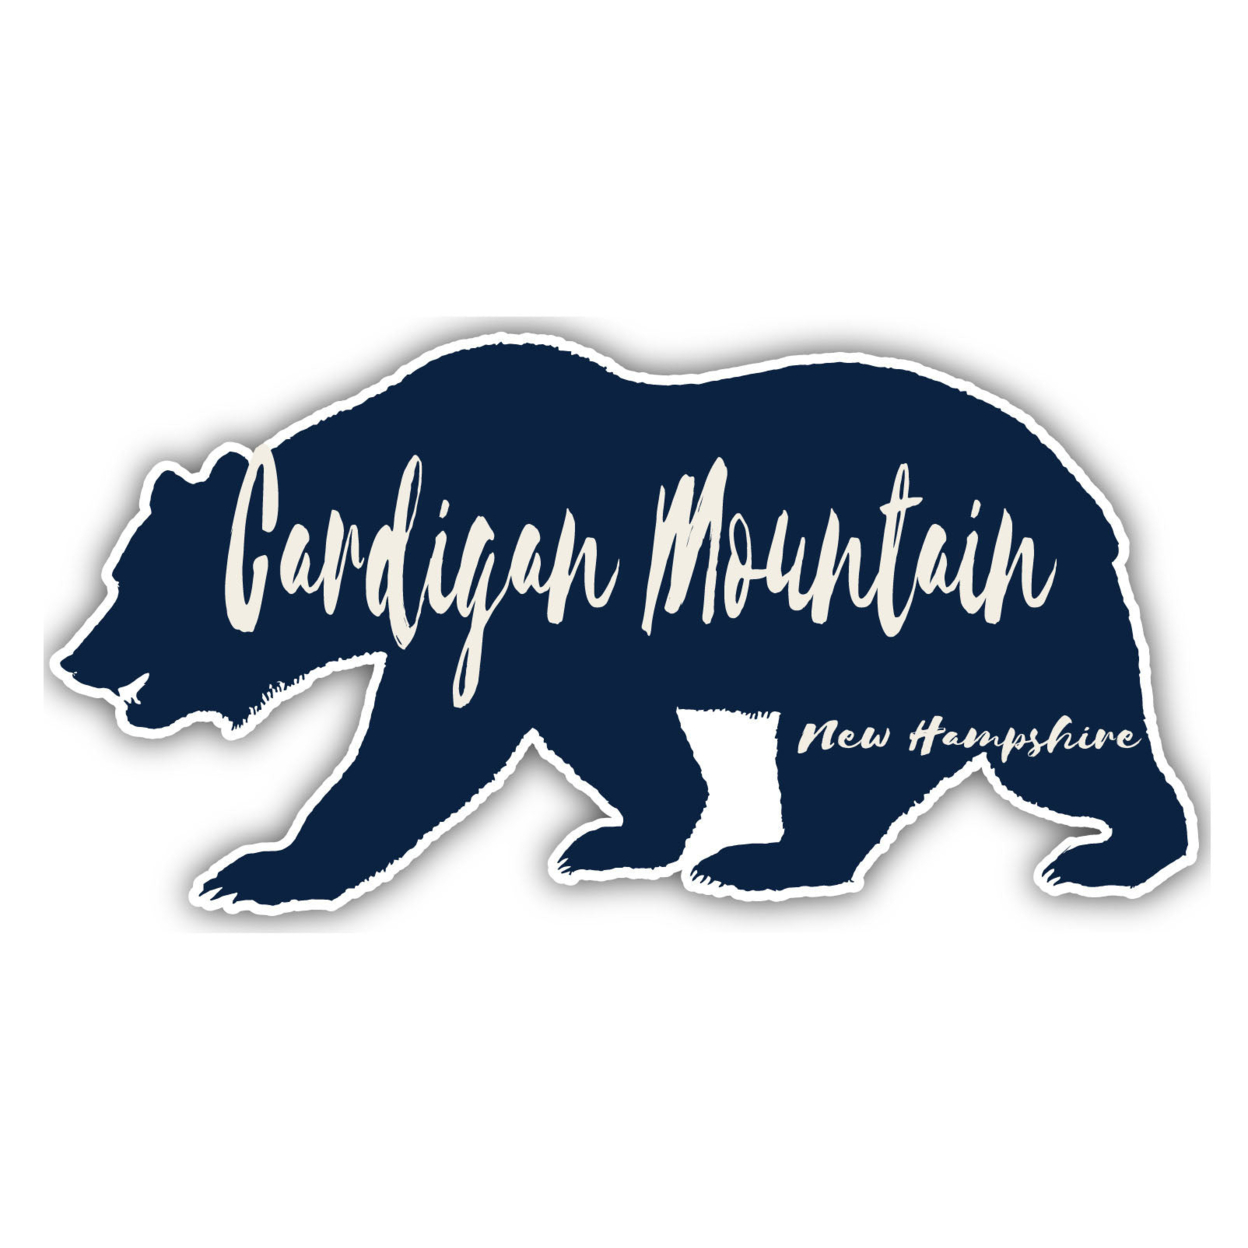 Cardigan Mountain New Hampshire Souvenir Decorative Stickers (Choose Theme And Size) - Single Unit, 6-Inch, Bear